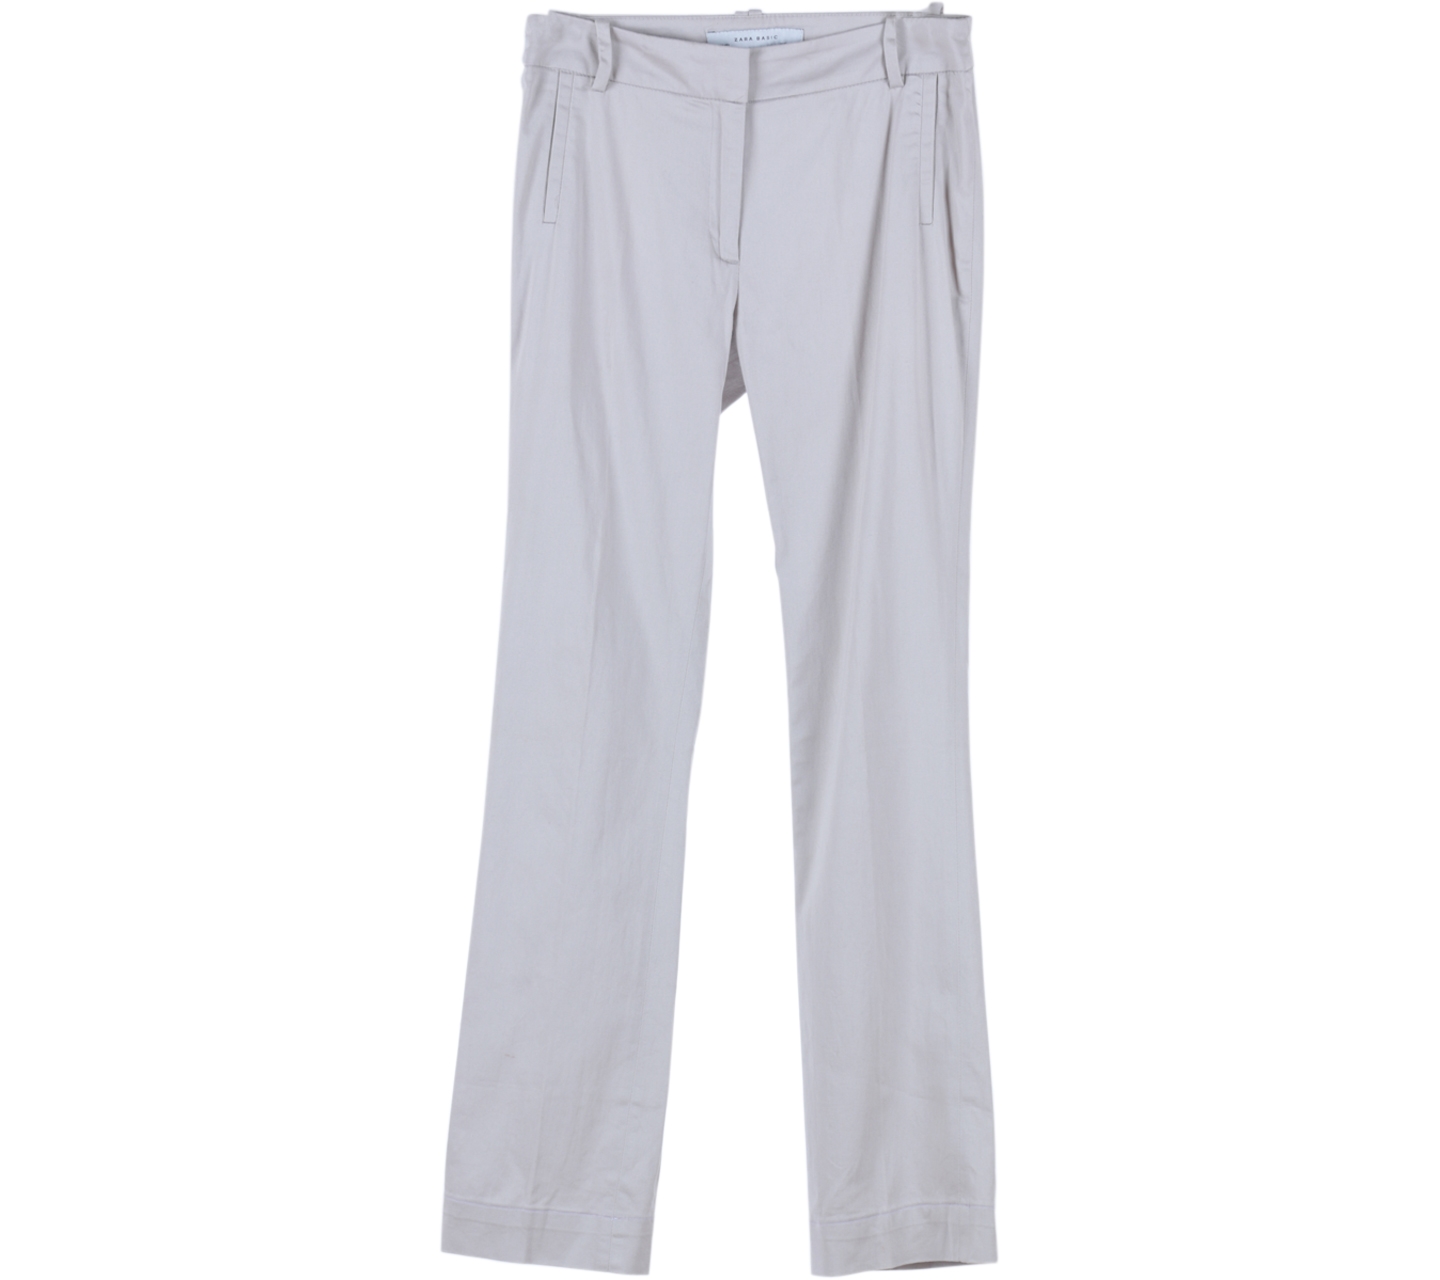 Zara Grey Pants